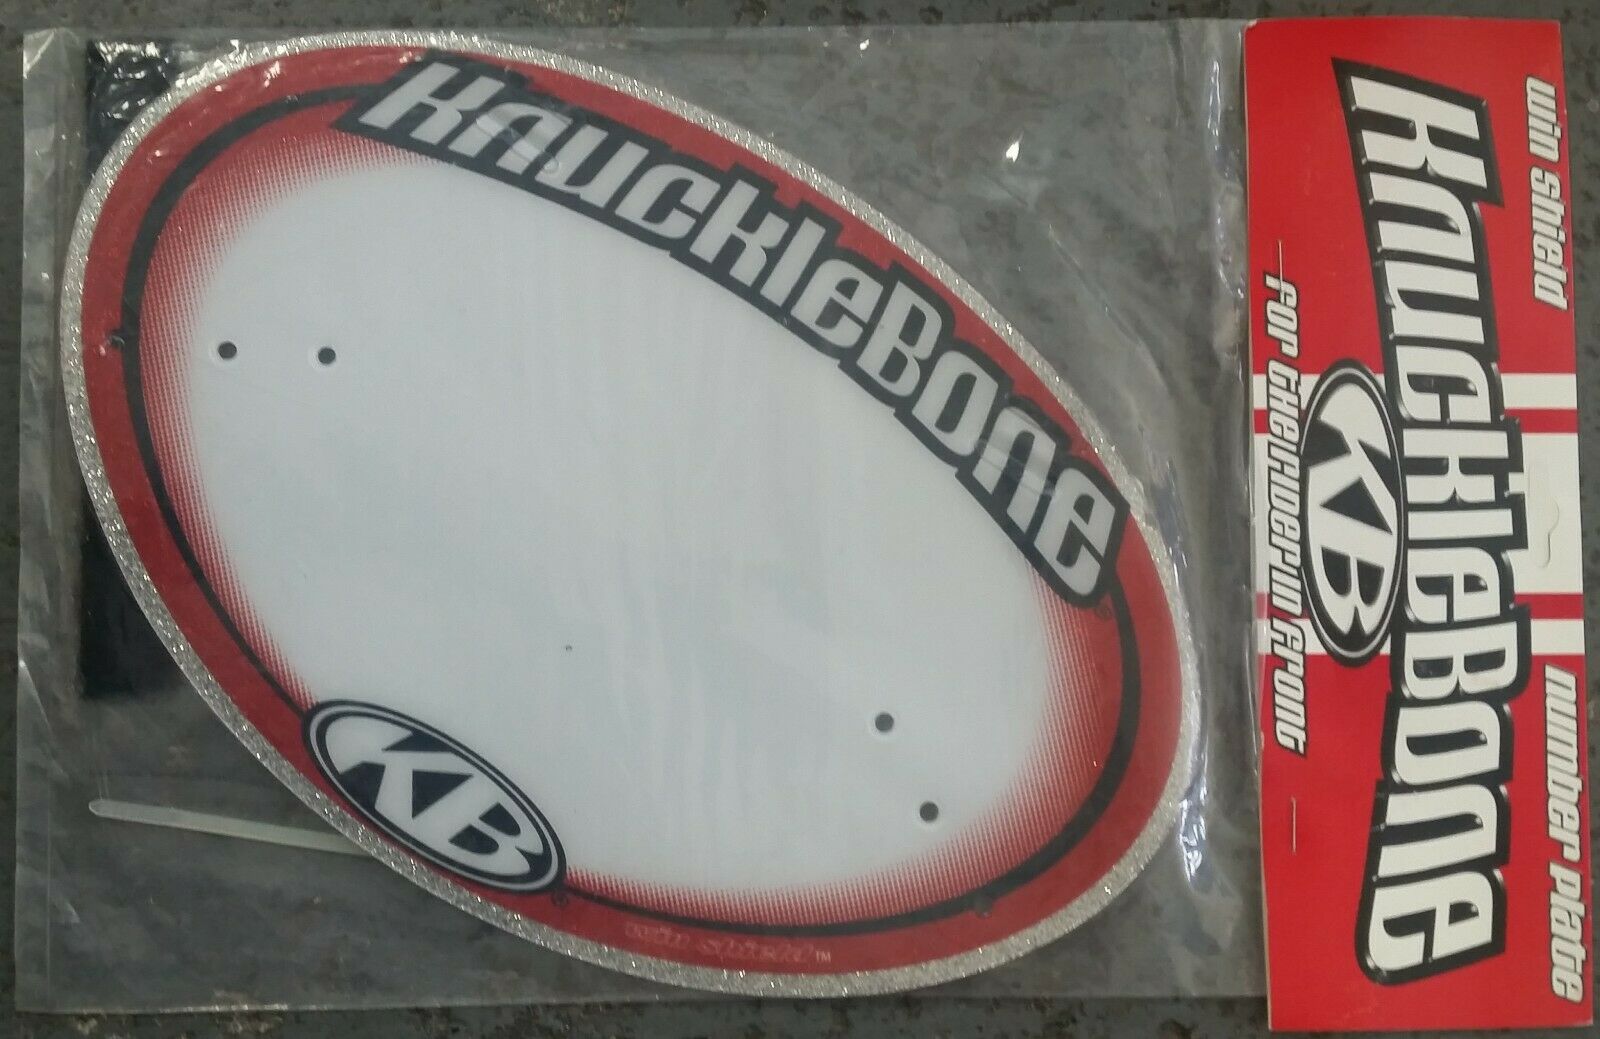 NOS Knucklebone "Win Shield" Pro BMX Number Plate - Glitter Silver & Red